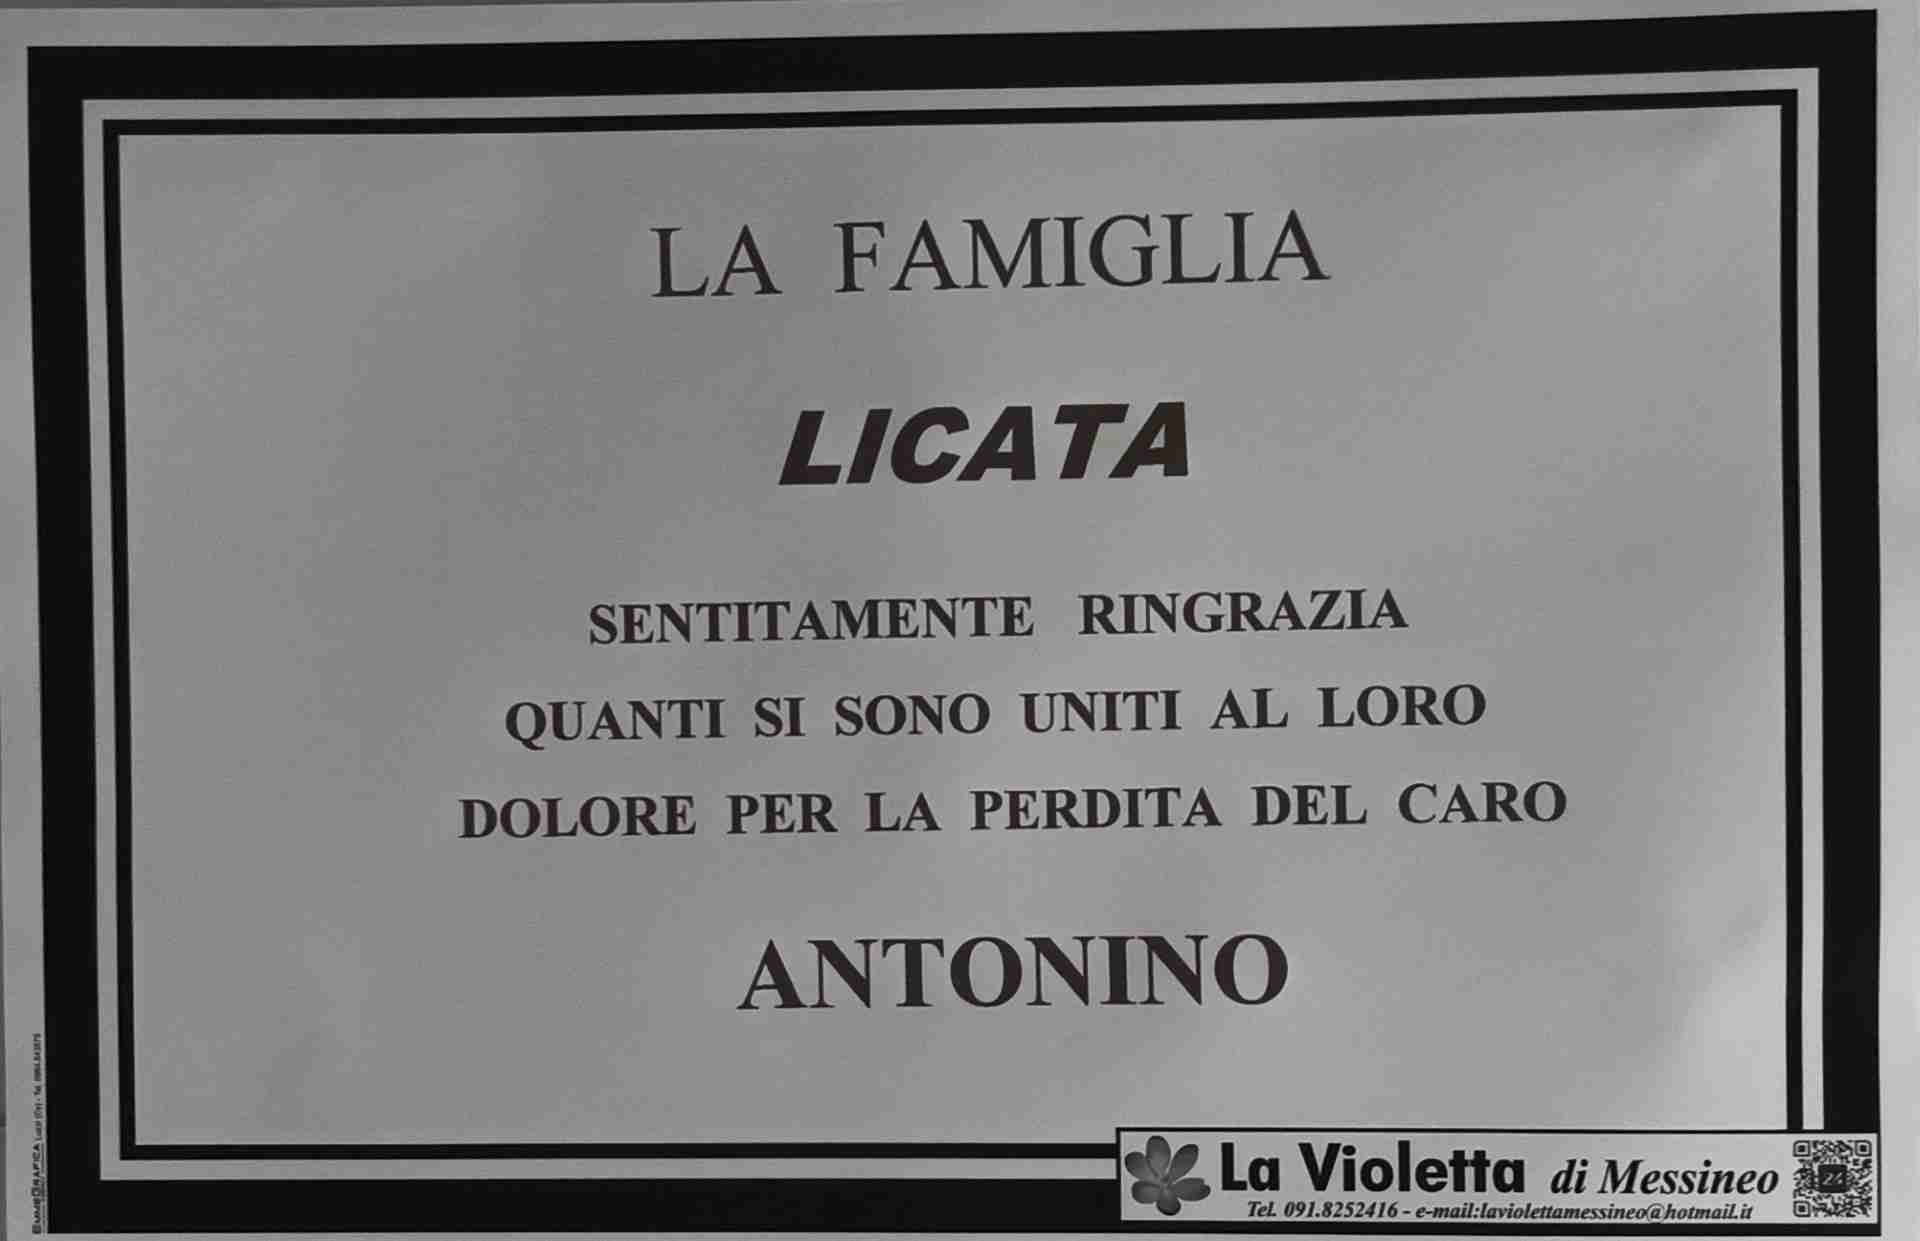 Antonino Licata